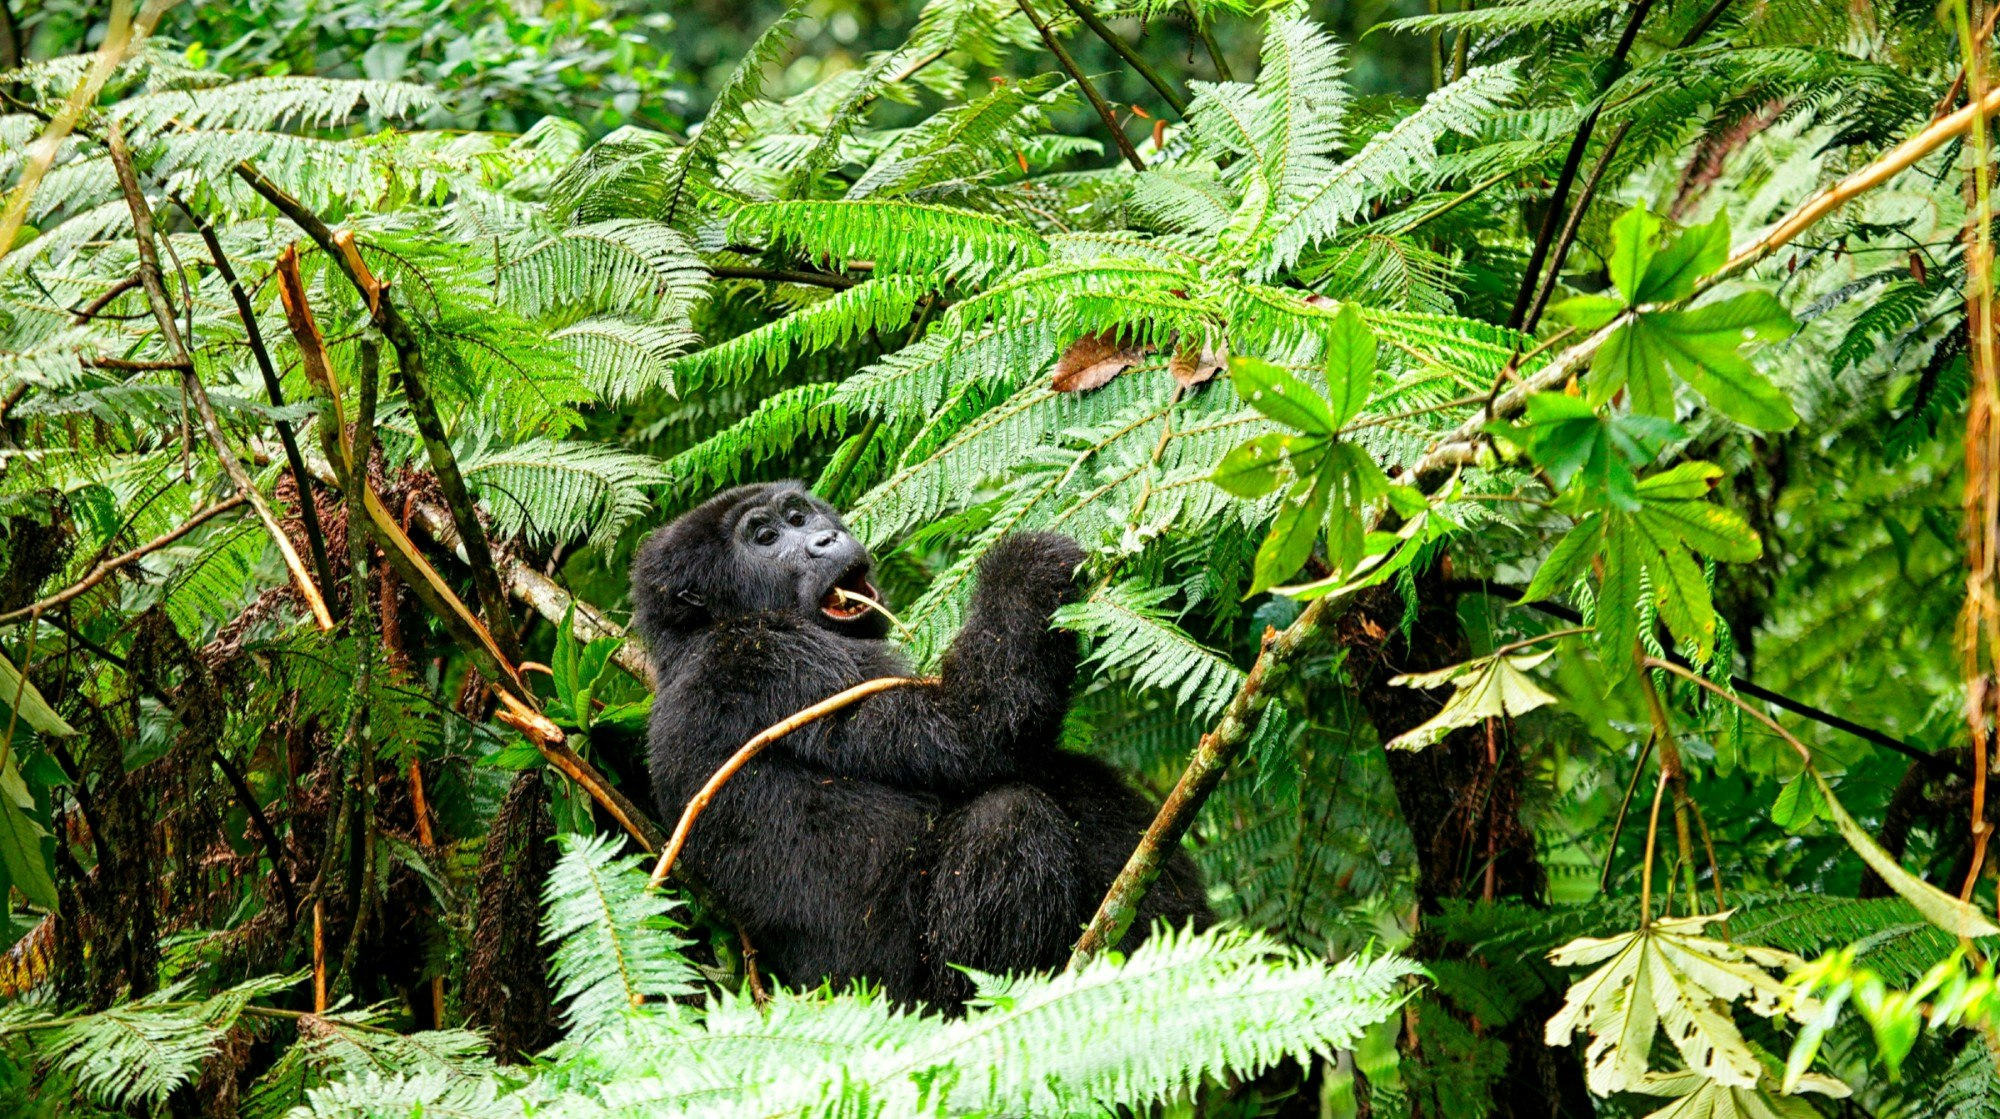 Mountain gorilla in Bwindi Impenetrable National Park